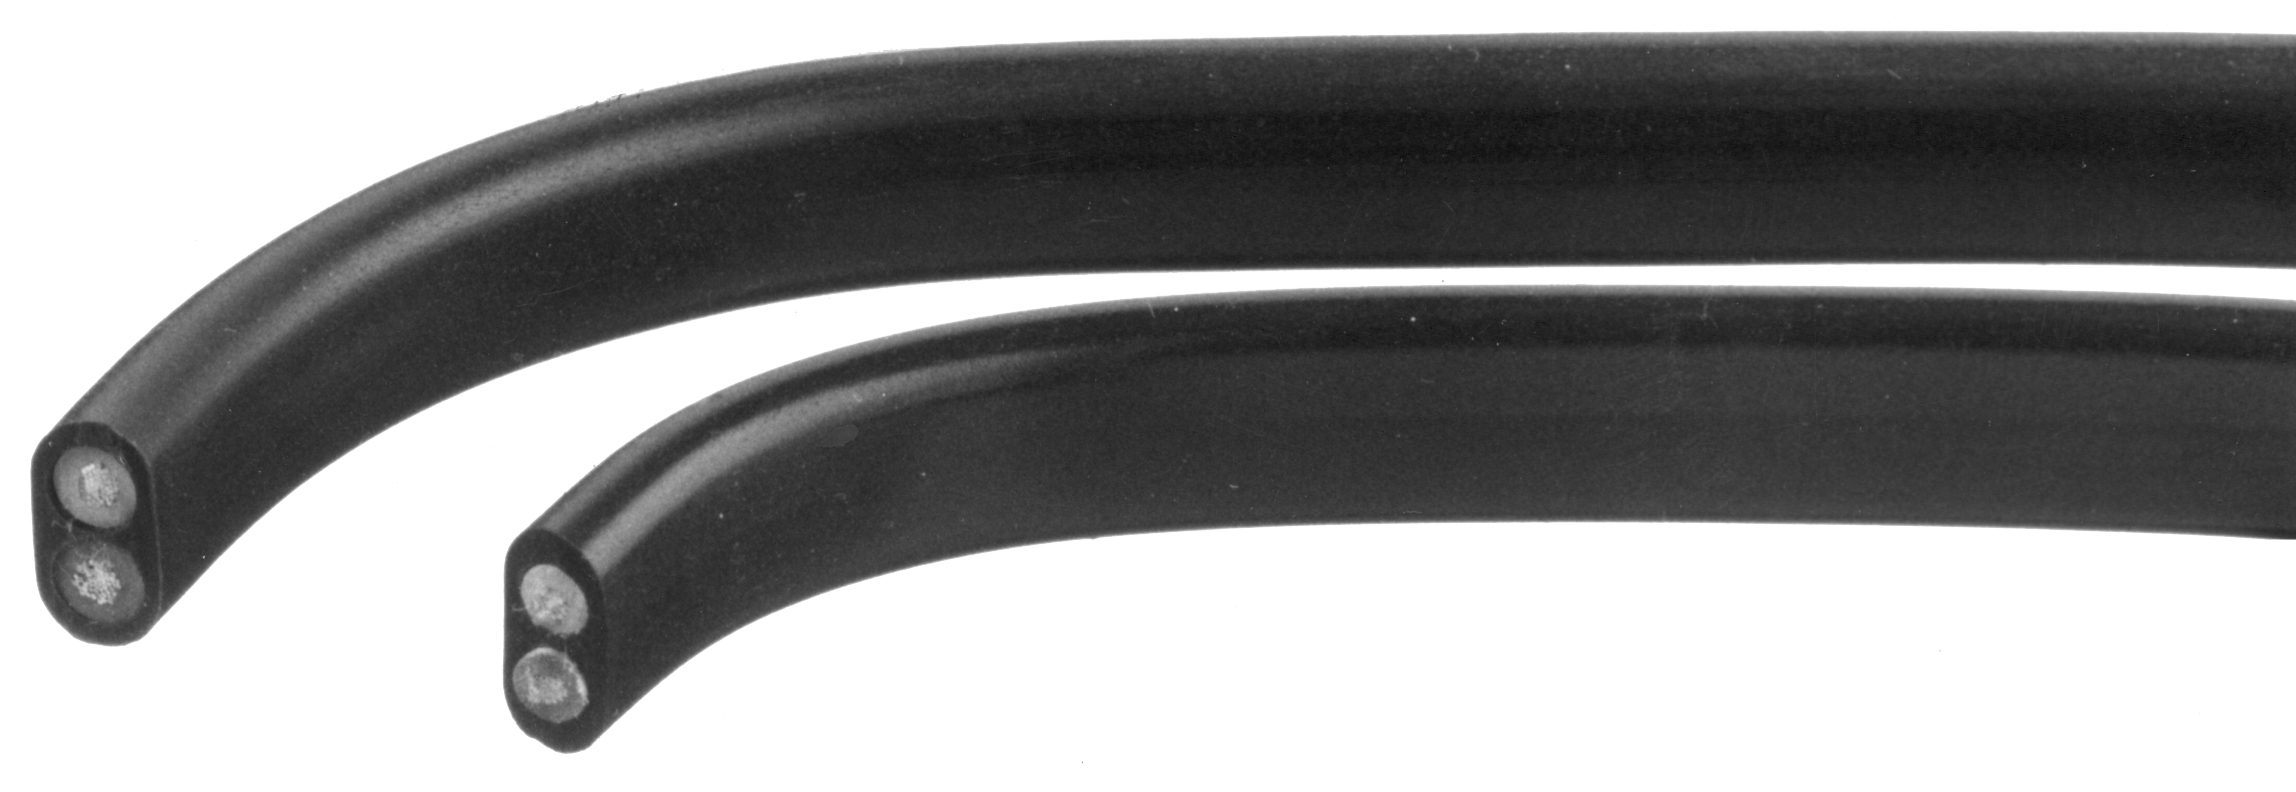 Illumination cable Thermoplastic 2x2.5mm²